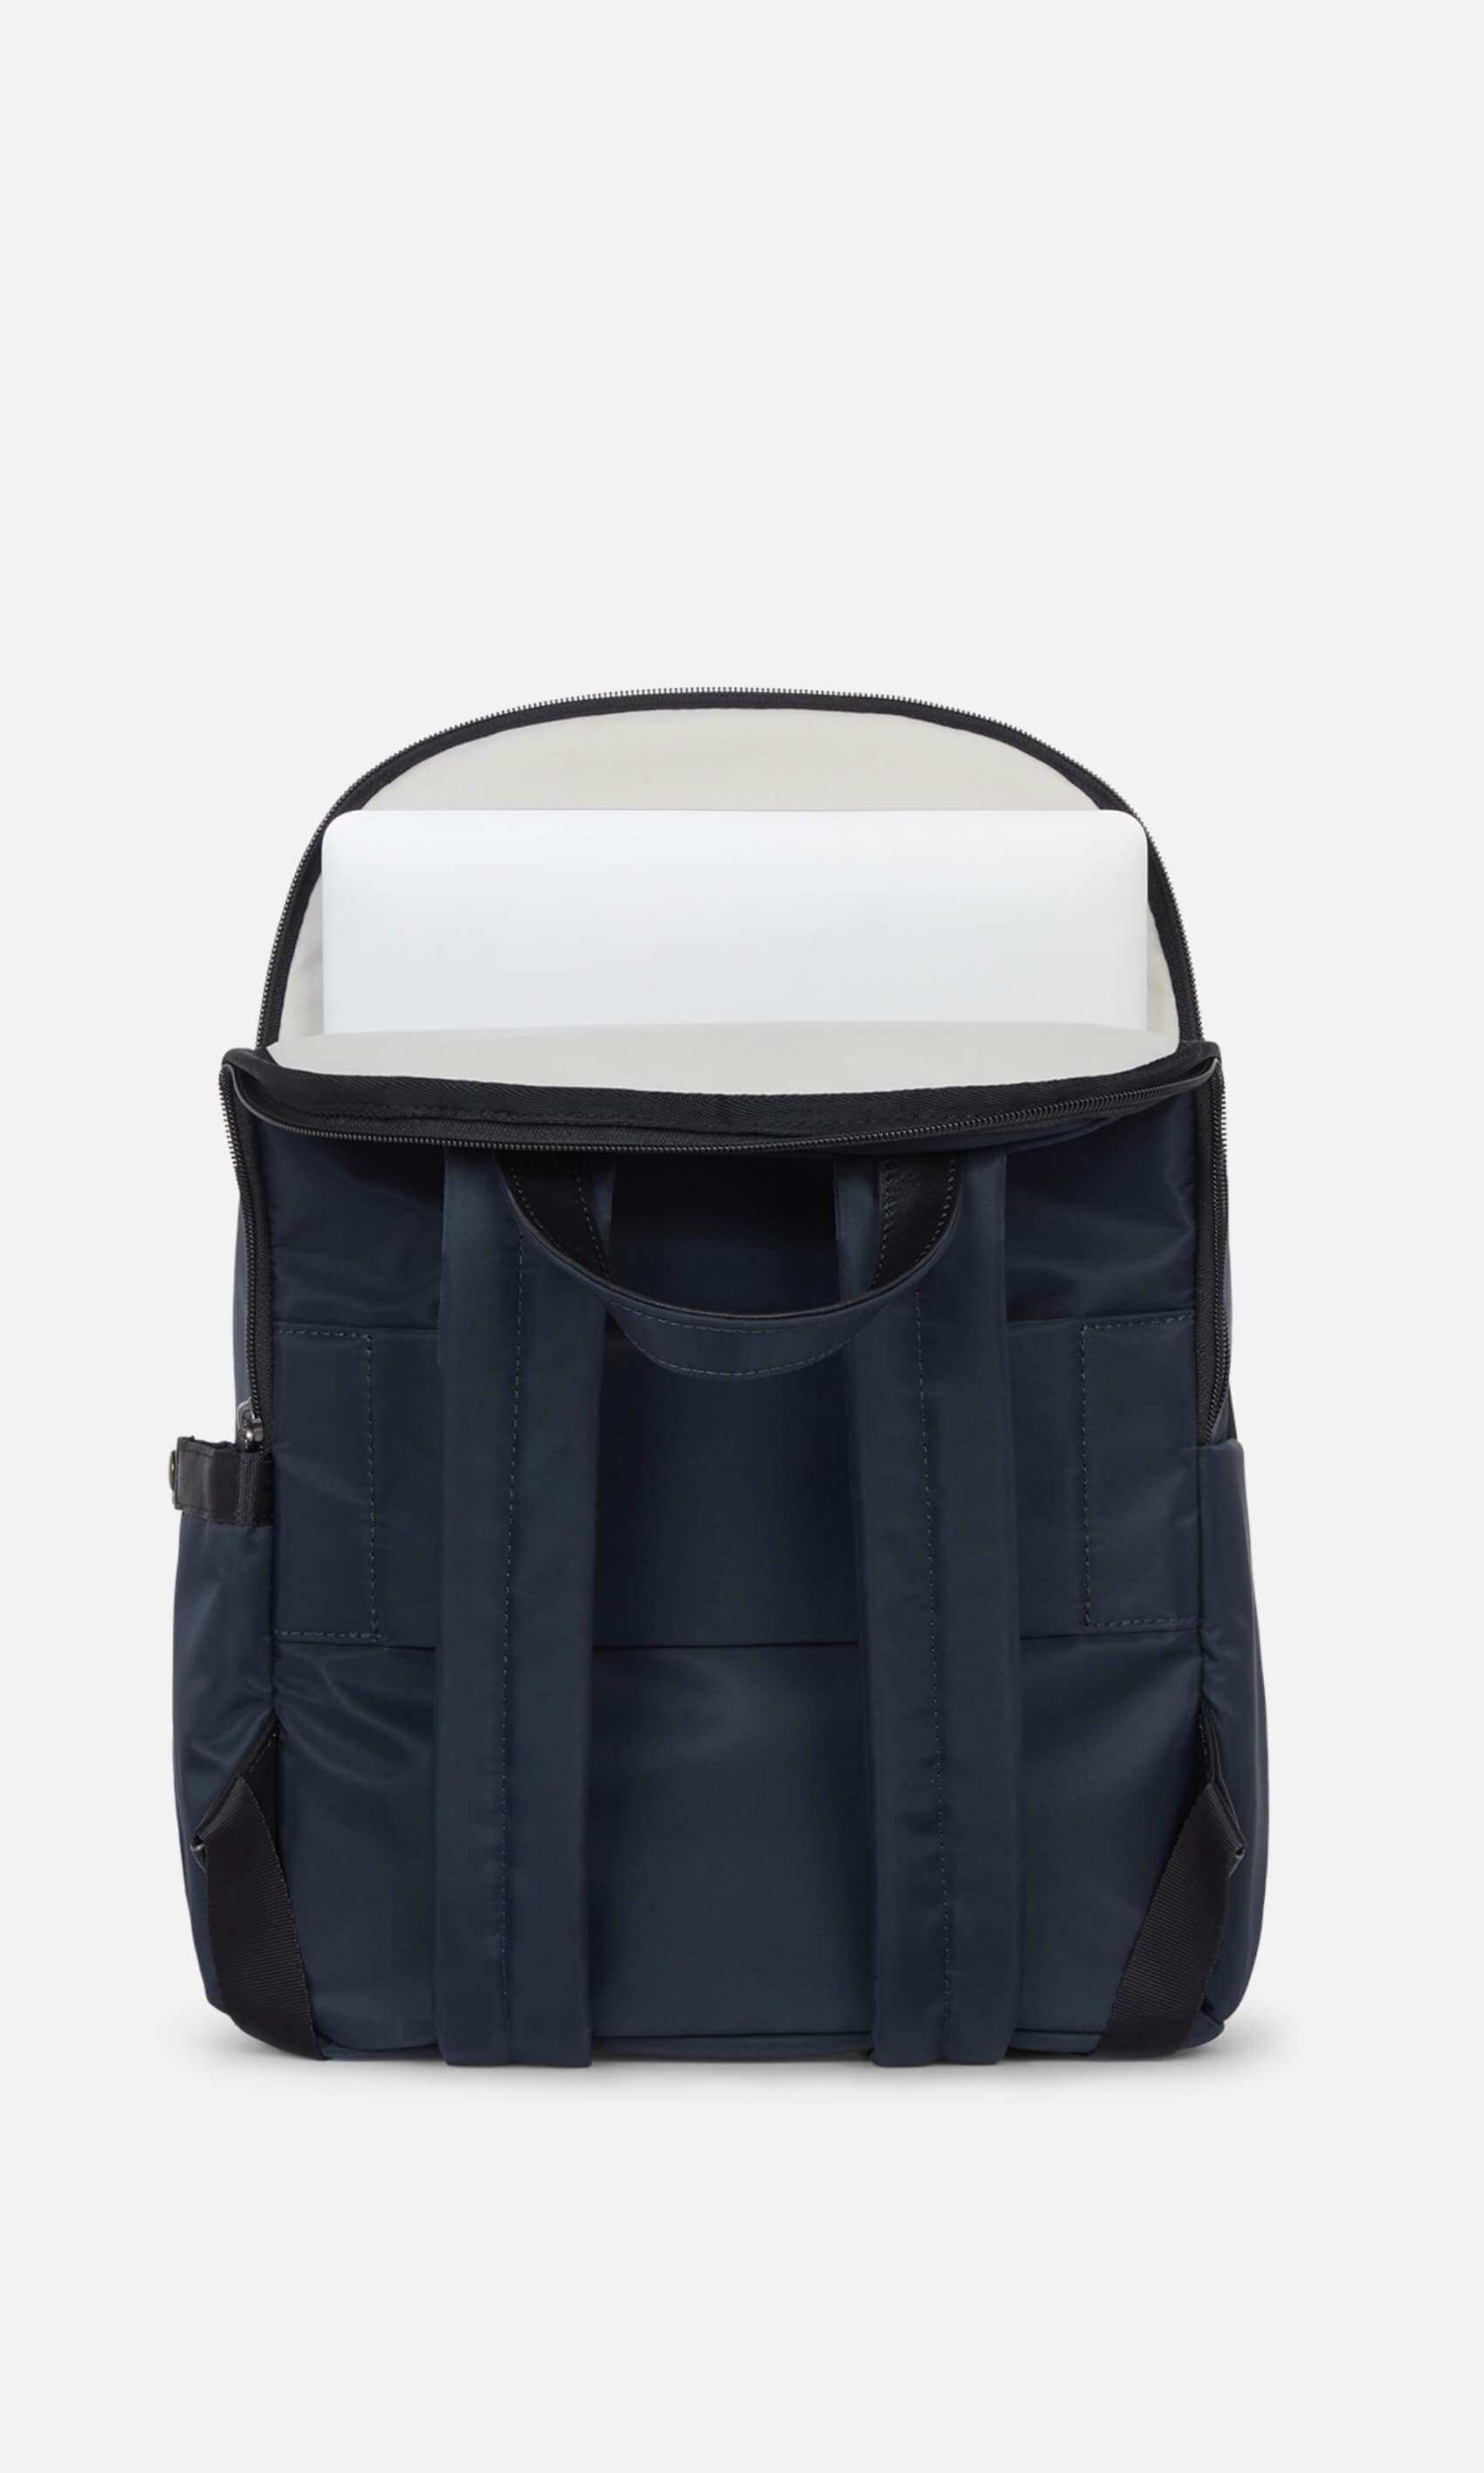 Antler Luggage -  Chelsea large backpack in navy - Backpacks Chelsea Backpack Navy | Travel & Lifestyle Bags | Antler UK